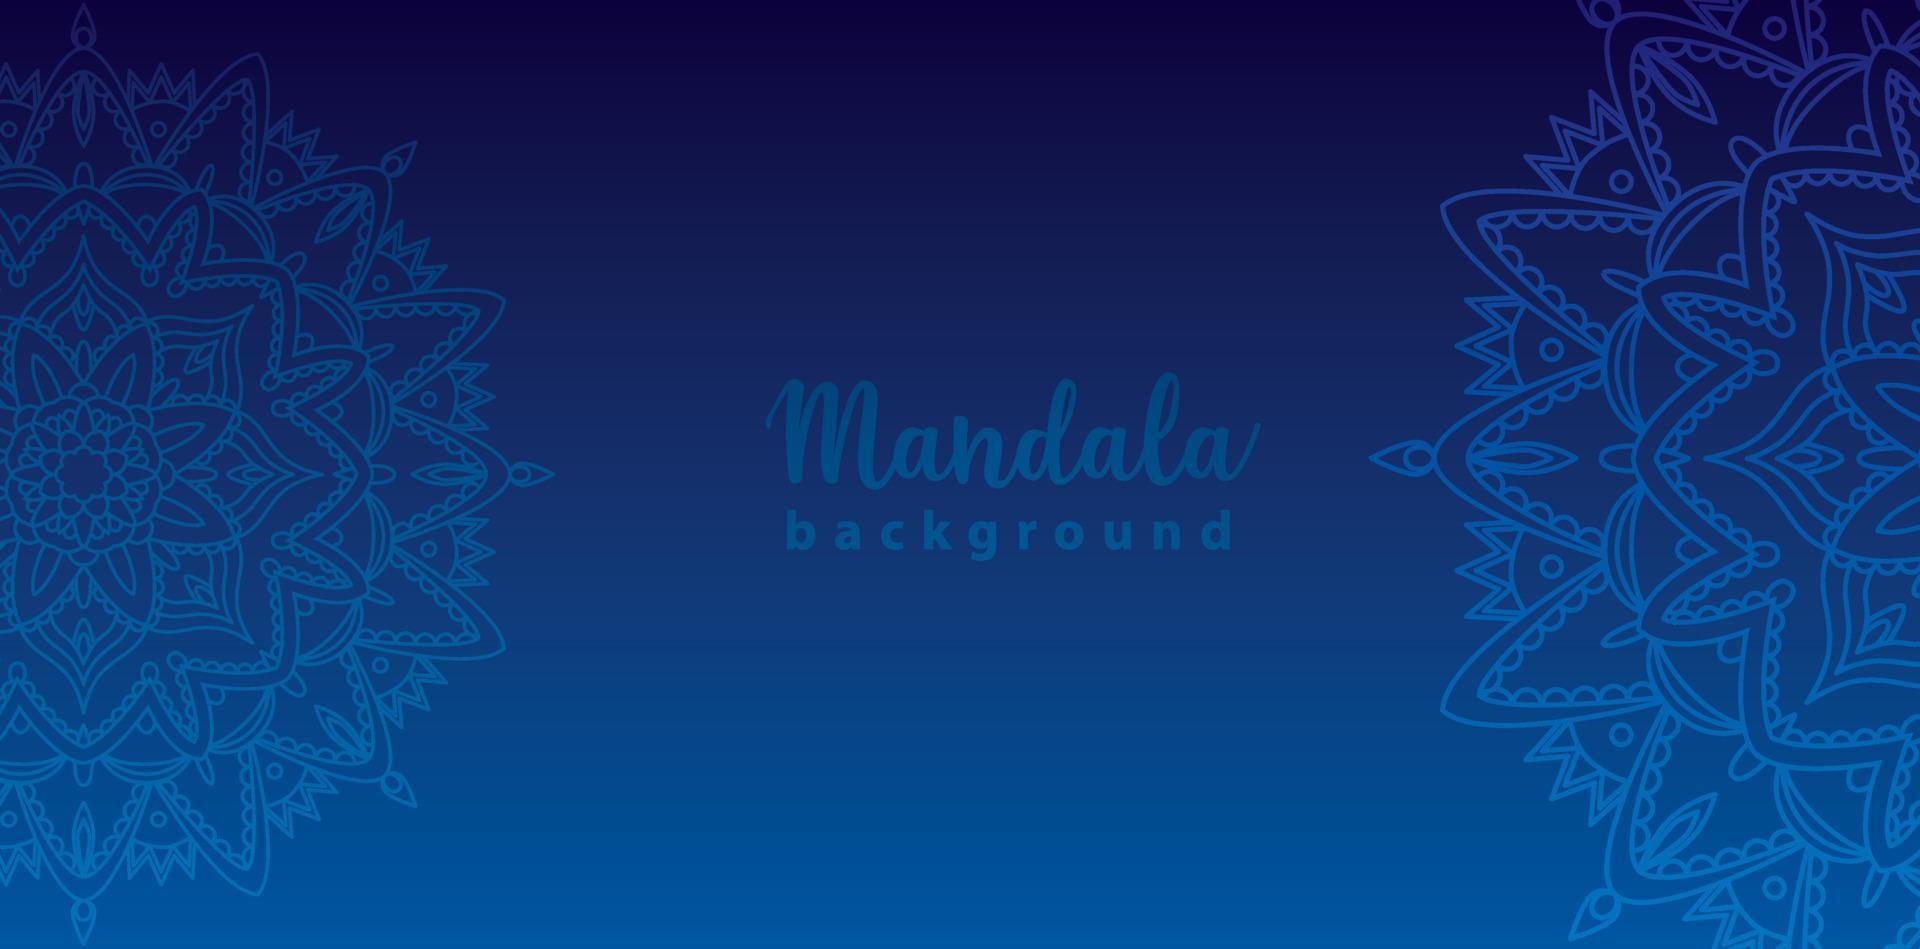 Mandala-Hintergrund blau. Vektor-Illustration vektor